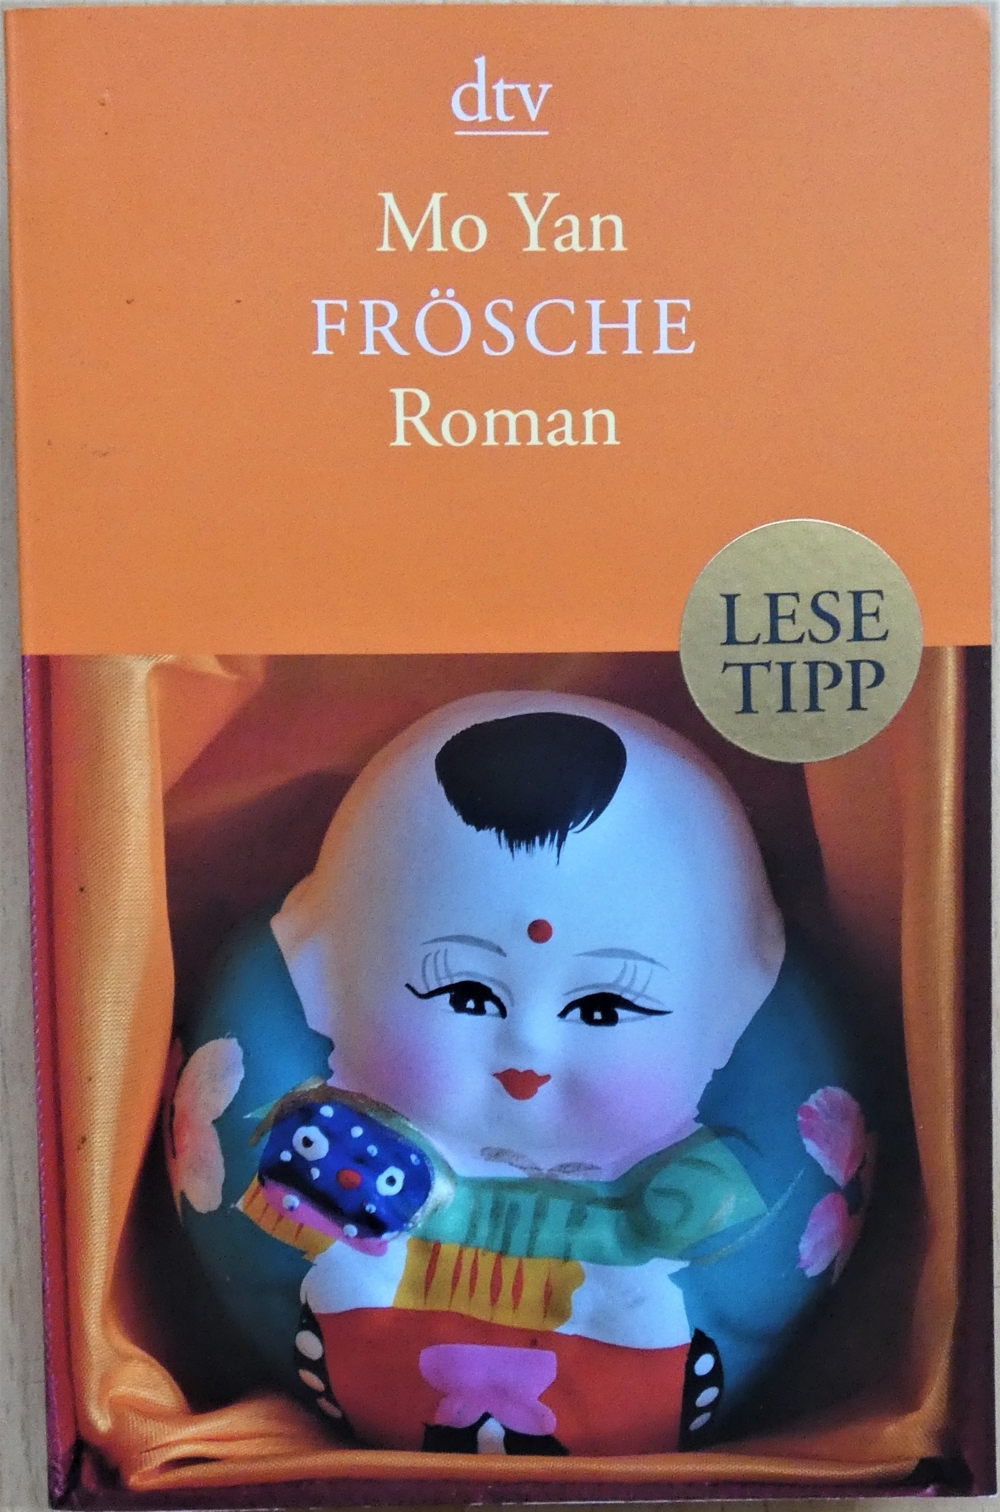 Frösche Mo Yan / dtv ISBN 978-3-423-14346-2